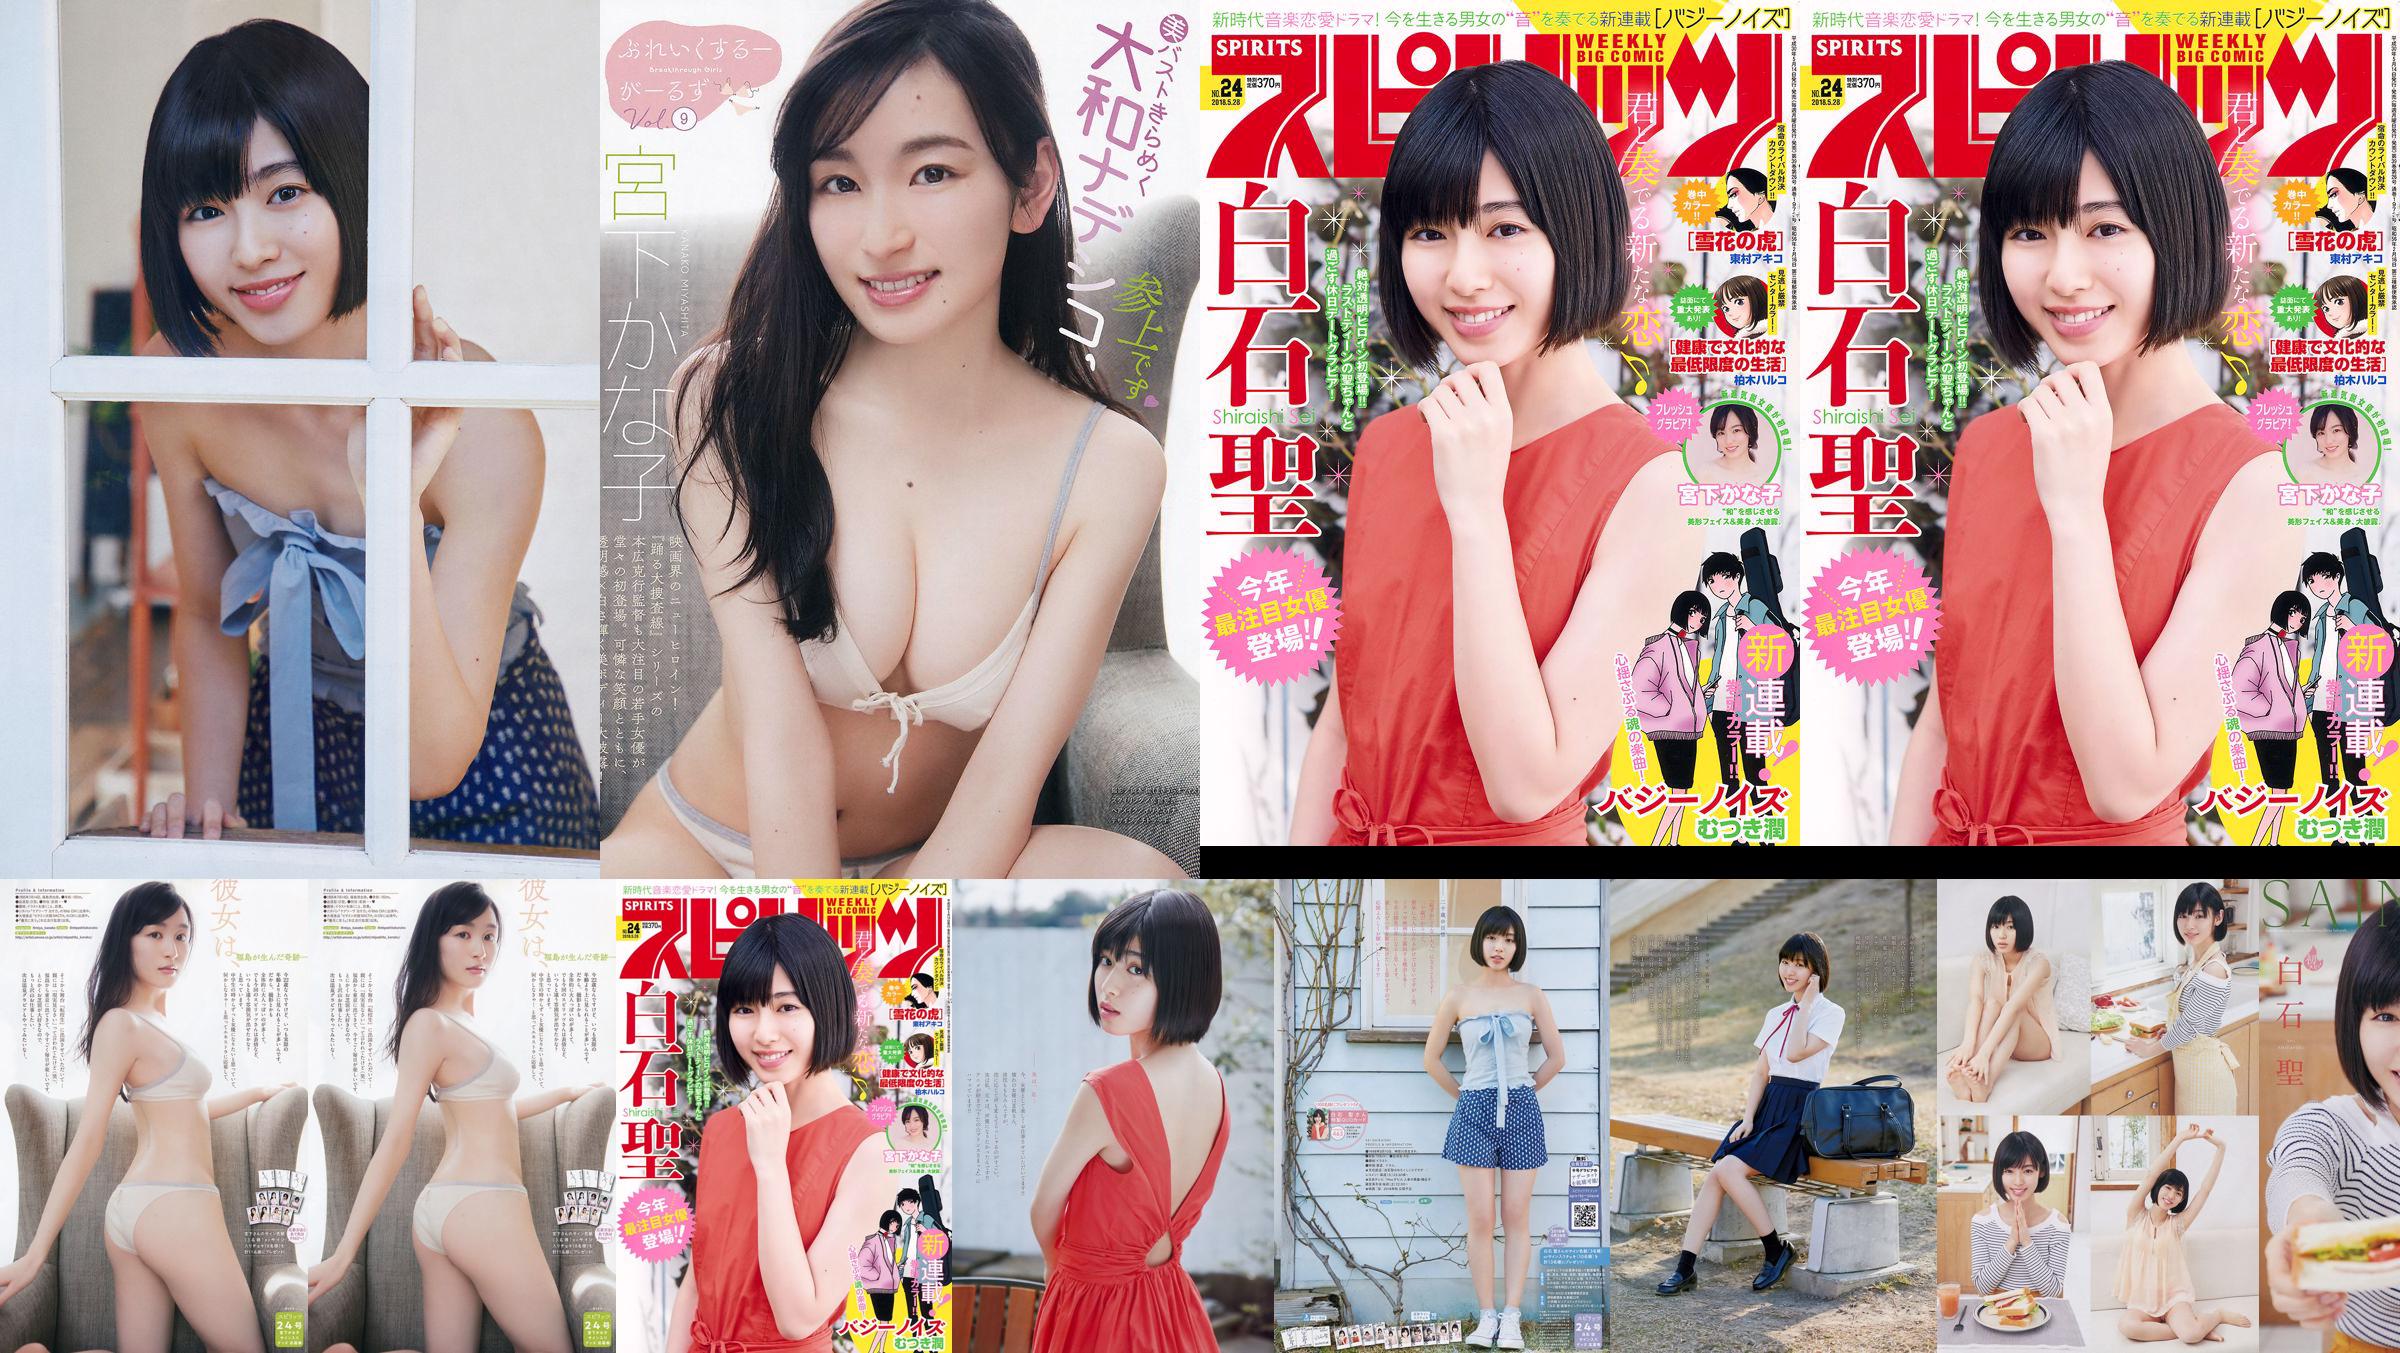 Yuria Kizaki Nana Okada AKB48 Under Girls [Weekly Young Jump] 2015 No.36-37 Photograph No.dc27ba Page 1